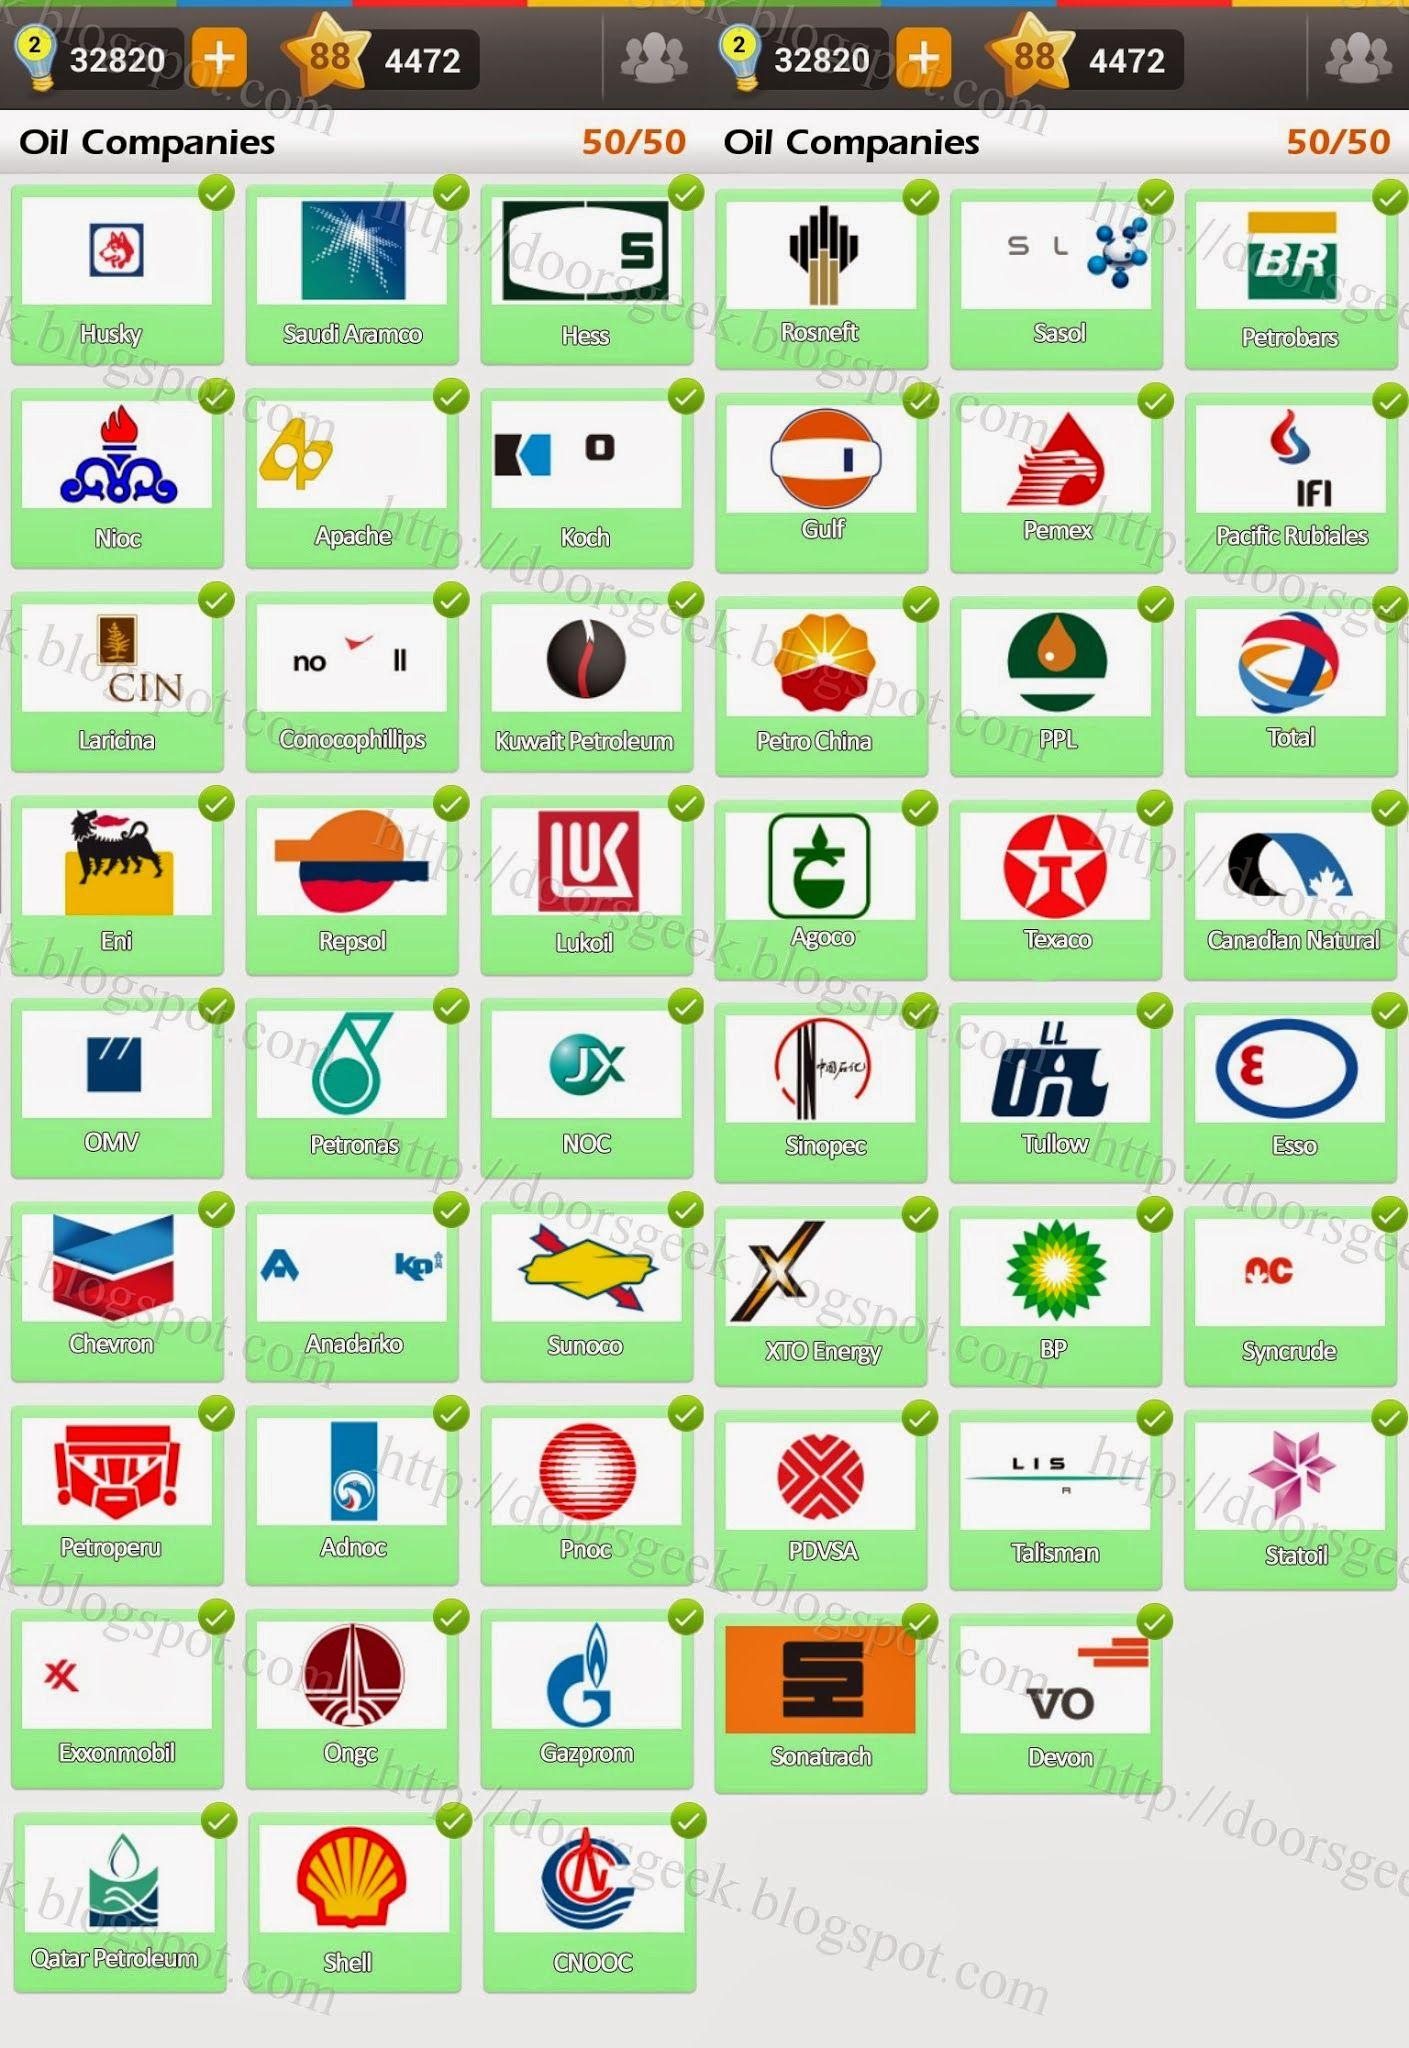 Oil Company Logo - Logo Game: Guess the Brand [Bonus] Oil Companies Doors Geek